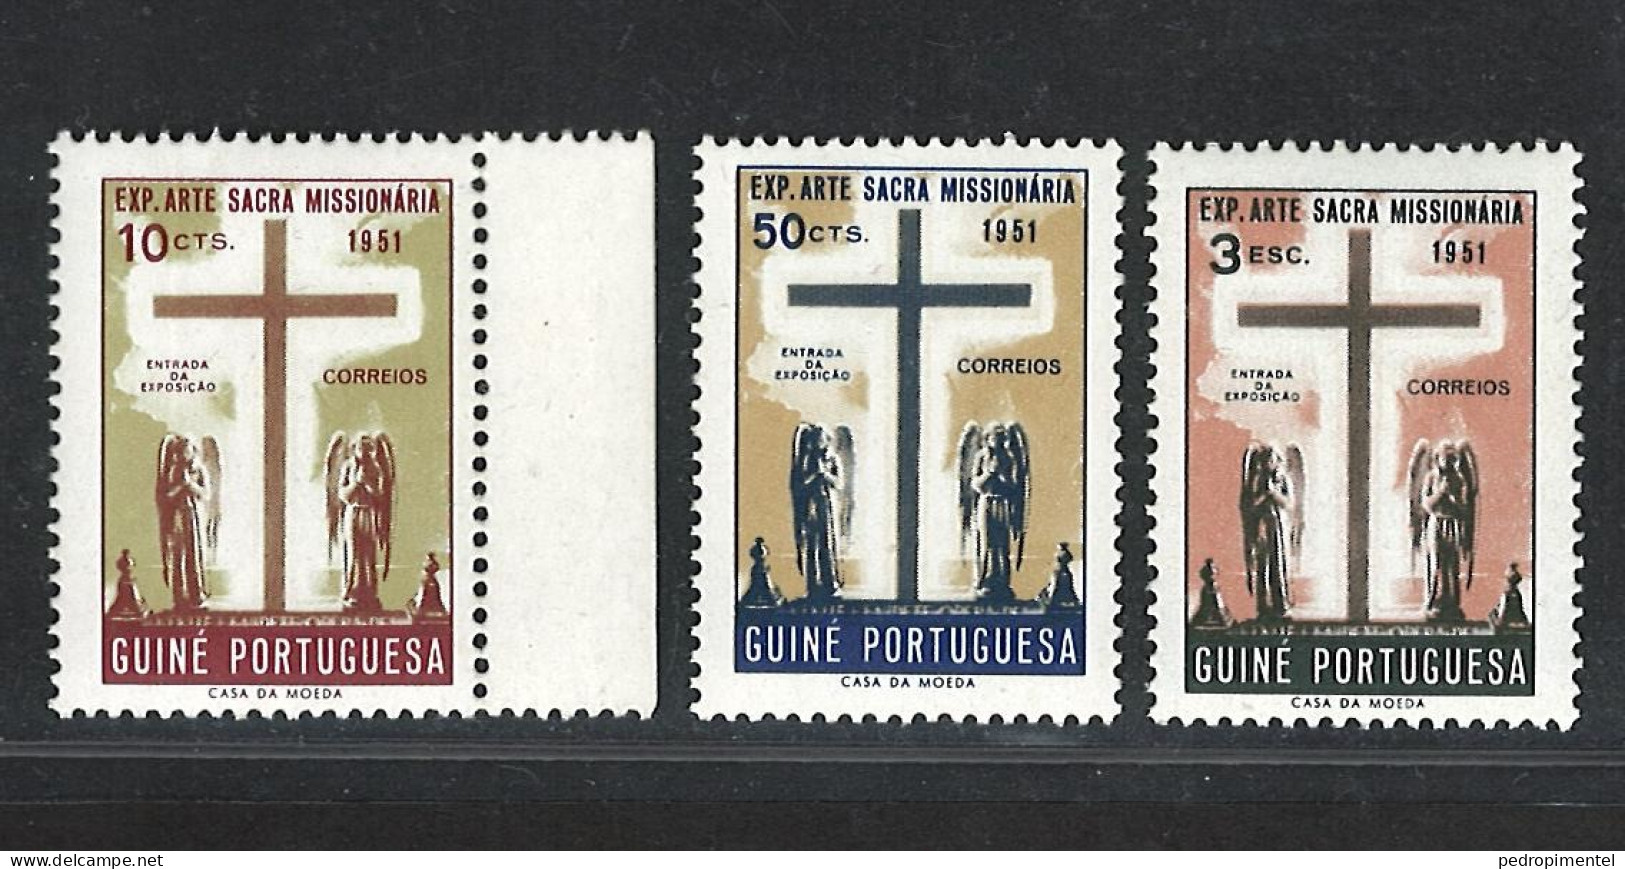 Portugal Guinee 1953 "Sacred Art" MNH OG #267-269 - Portuguese Guinea